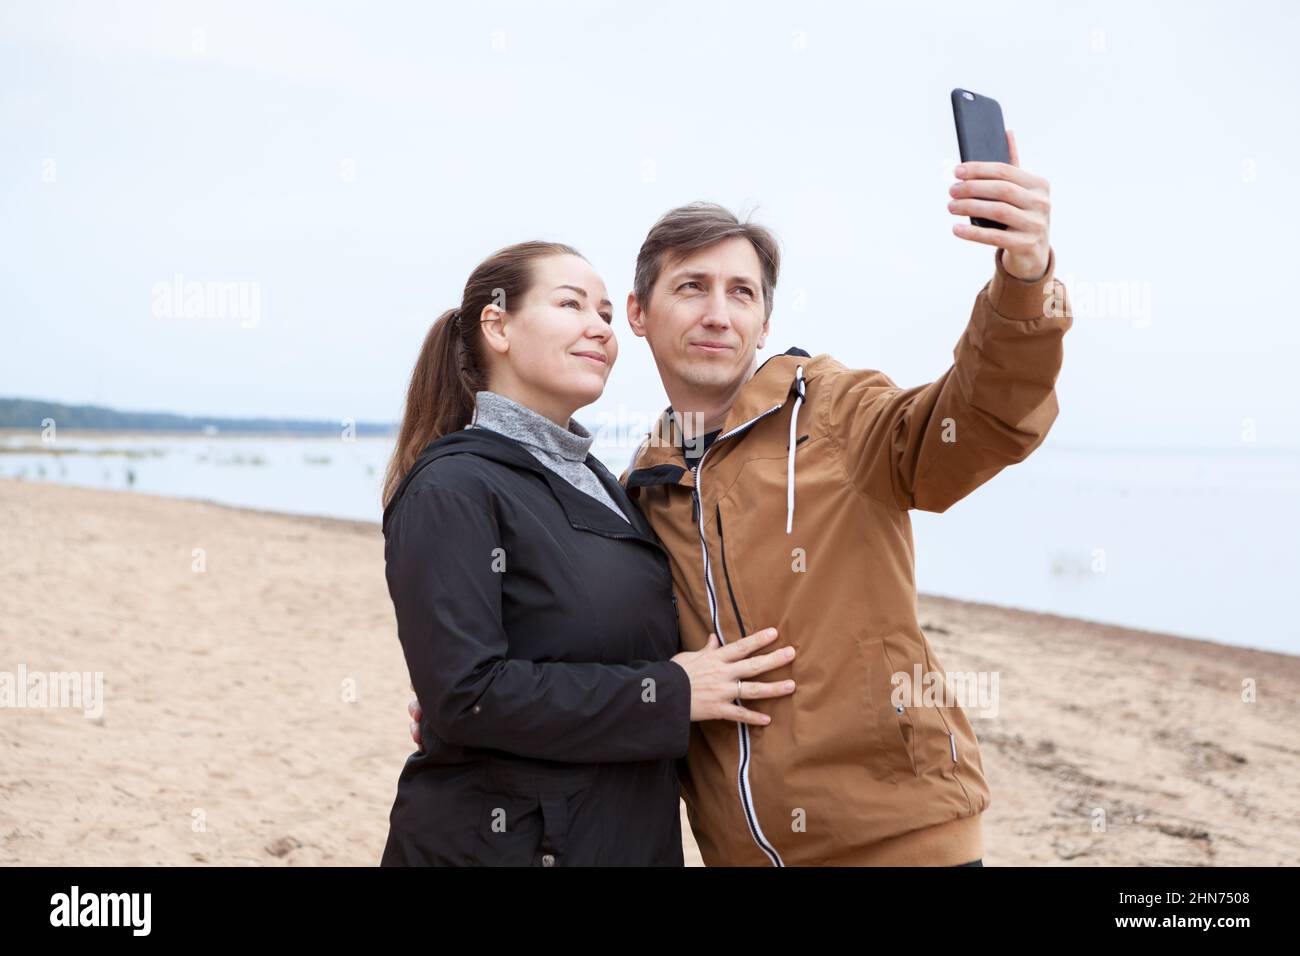 Loving couple taking selfie while walking on coastline, Caucasian people Stock Photo